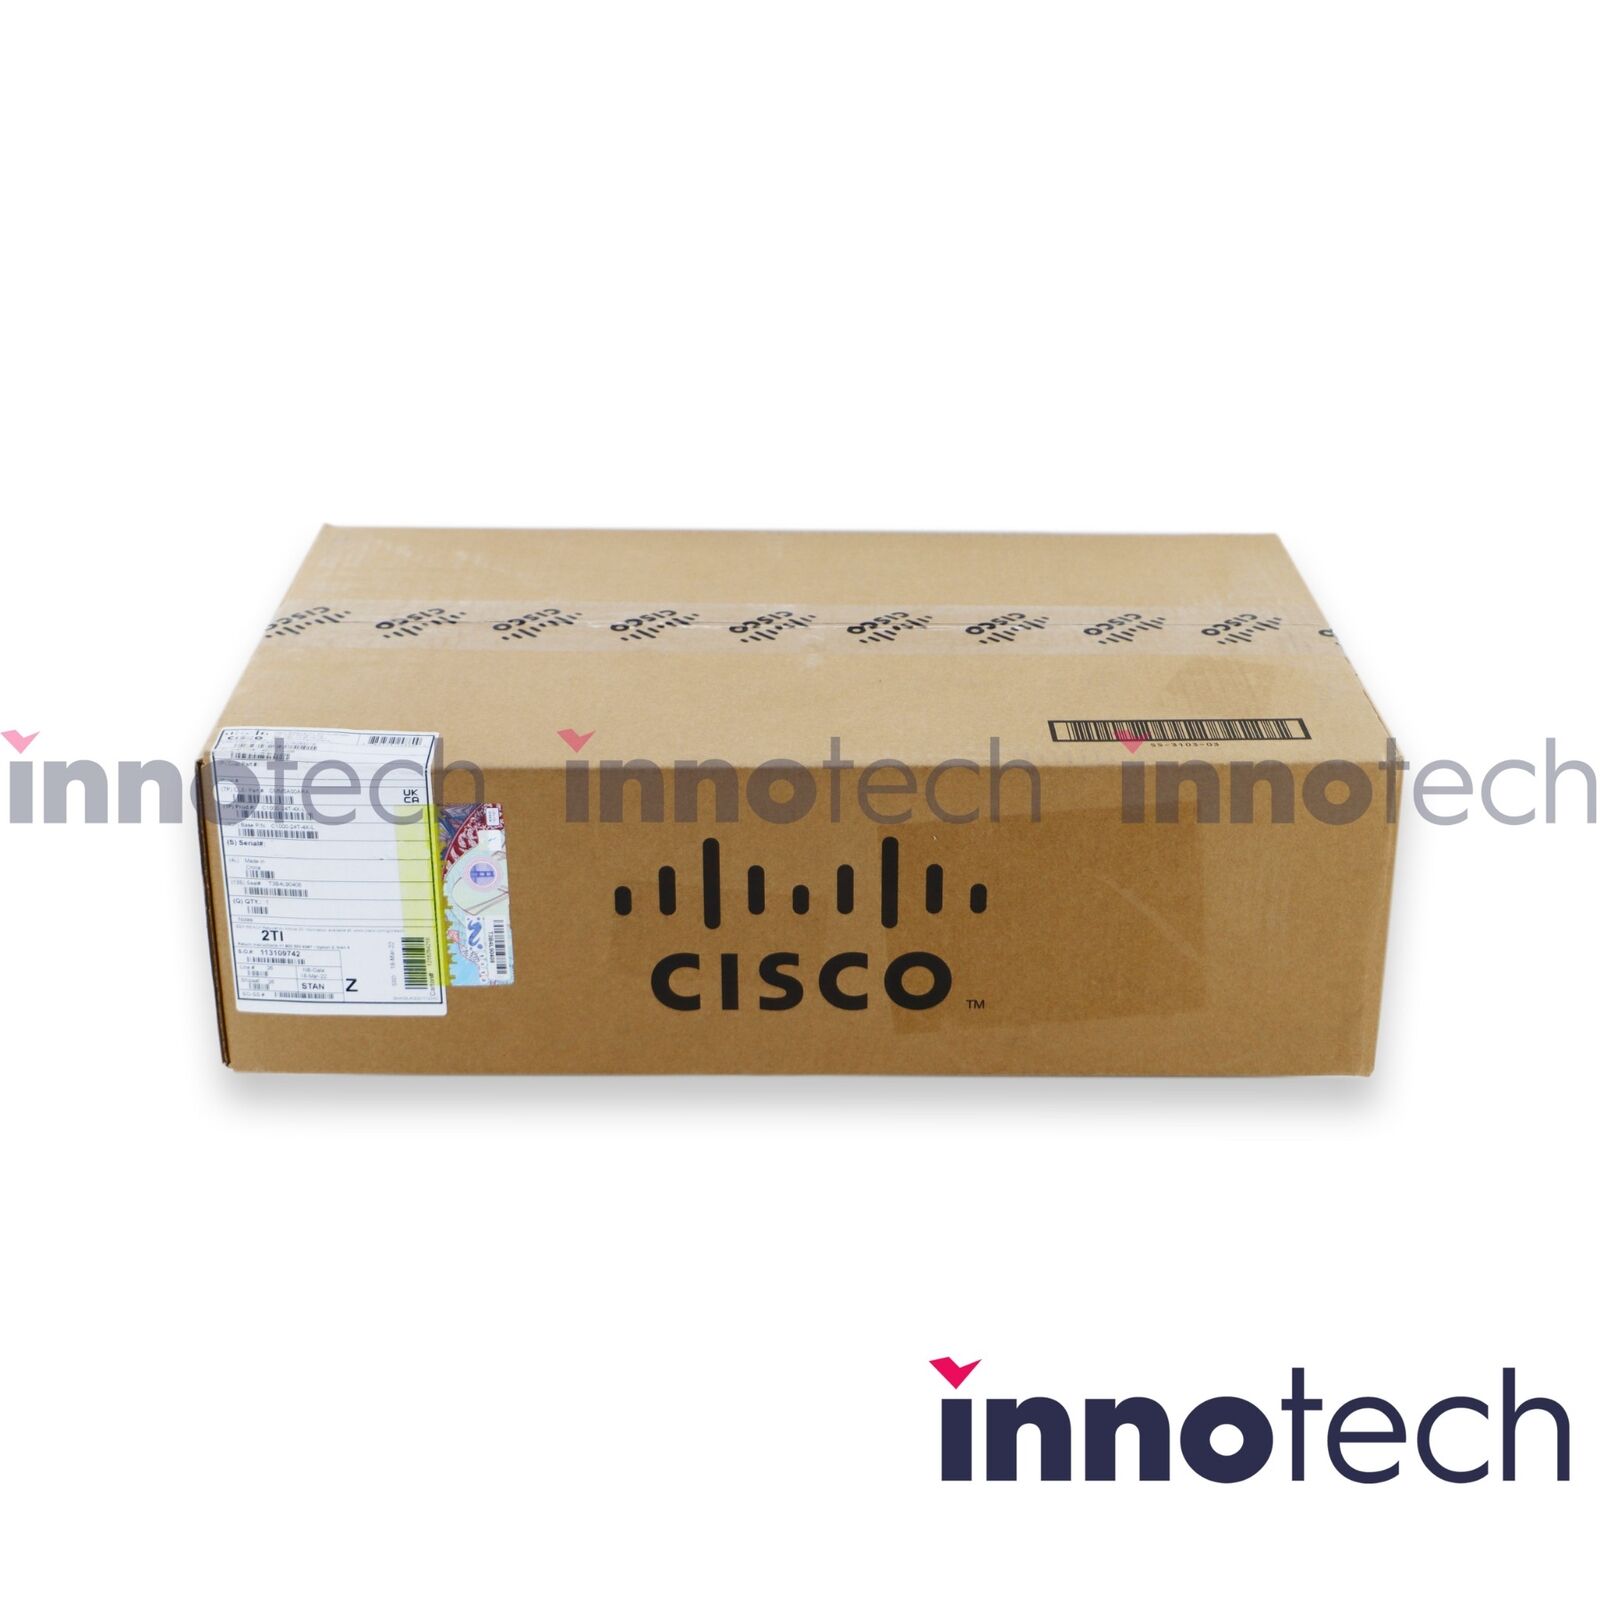 Cisco C1000-24T-4X-L Cisco Catalyst 1000 Switch 24 Ports New Sealed